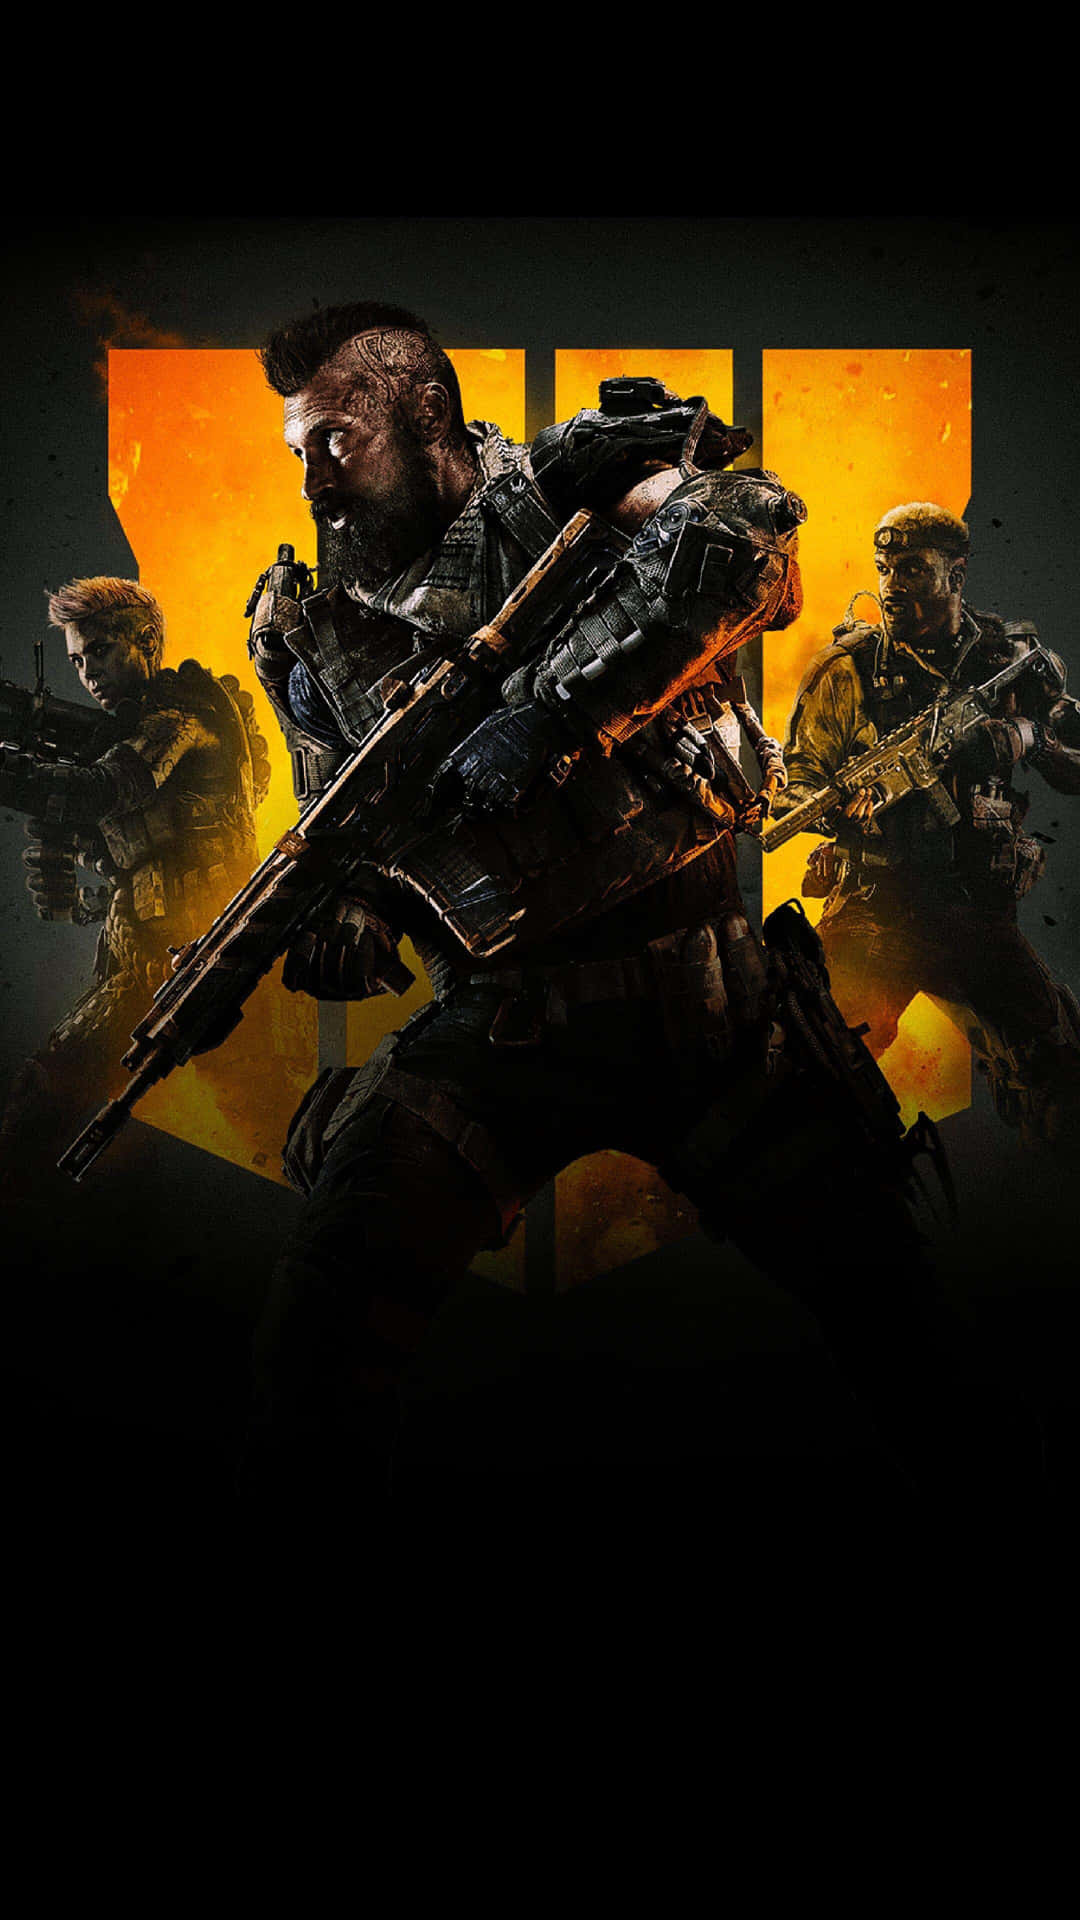 Udforsk slagmarken i Call of Duty: Black Ops 4 med dette dramatiske tapet. Wallpaper